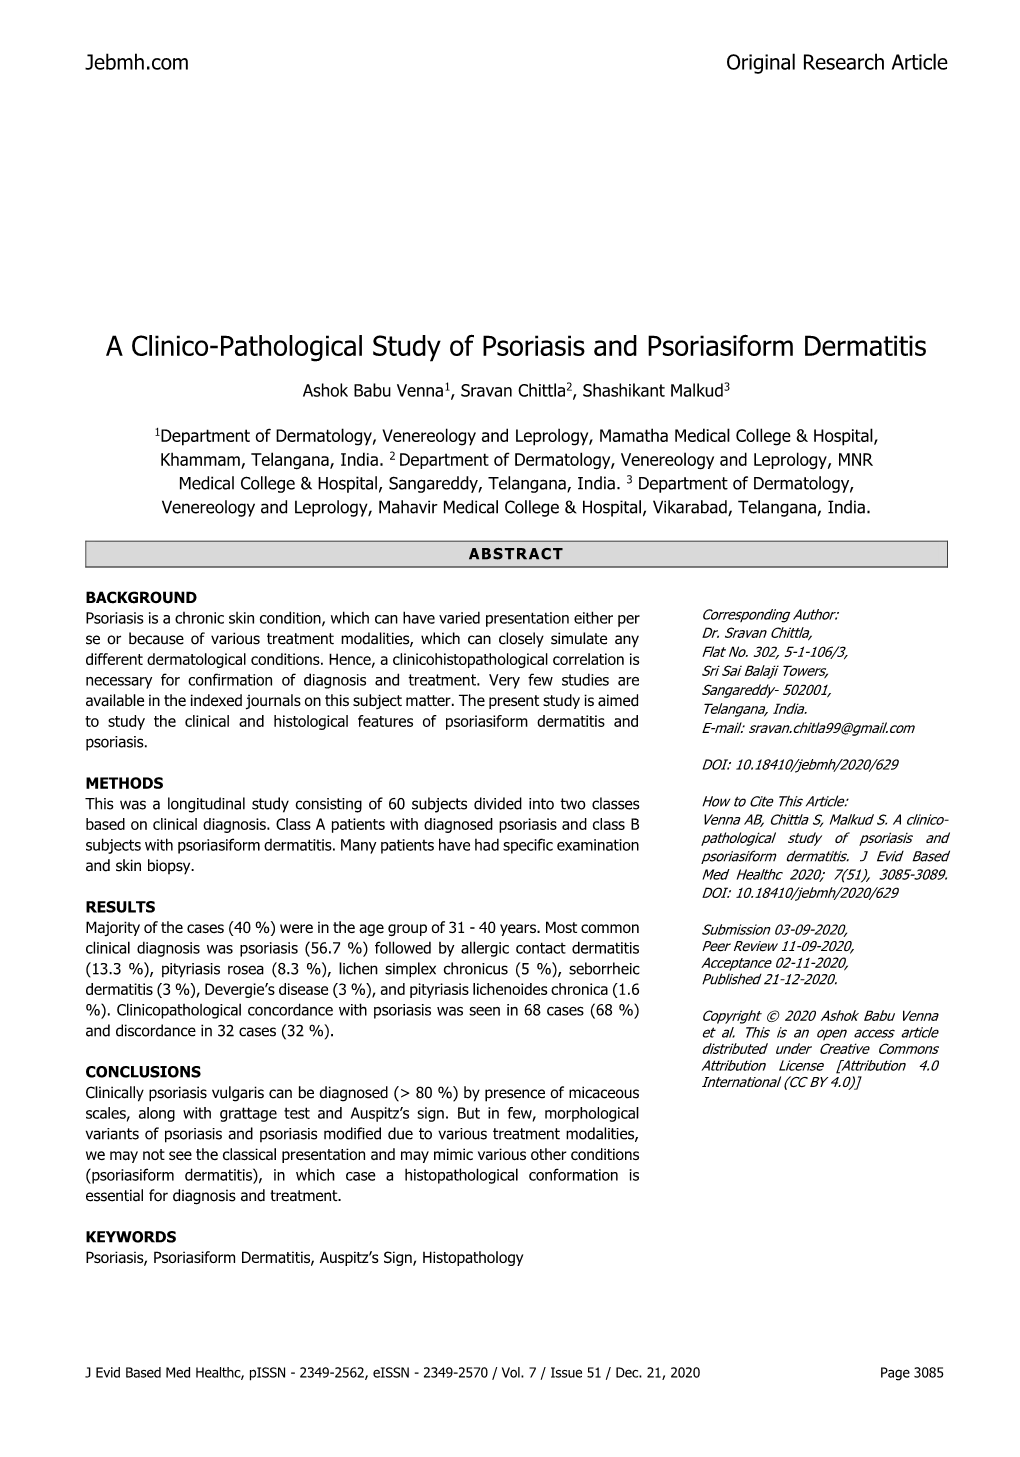 A Clinico-Pathological Study of Psoriasis and Psoriasiform Dermatitis